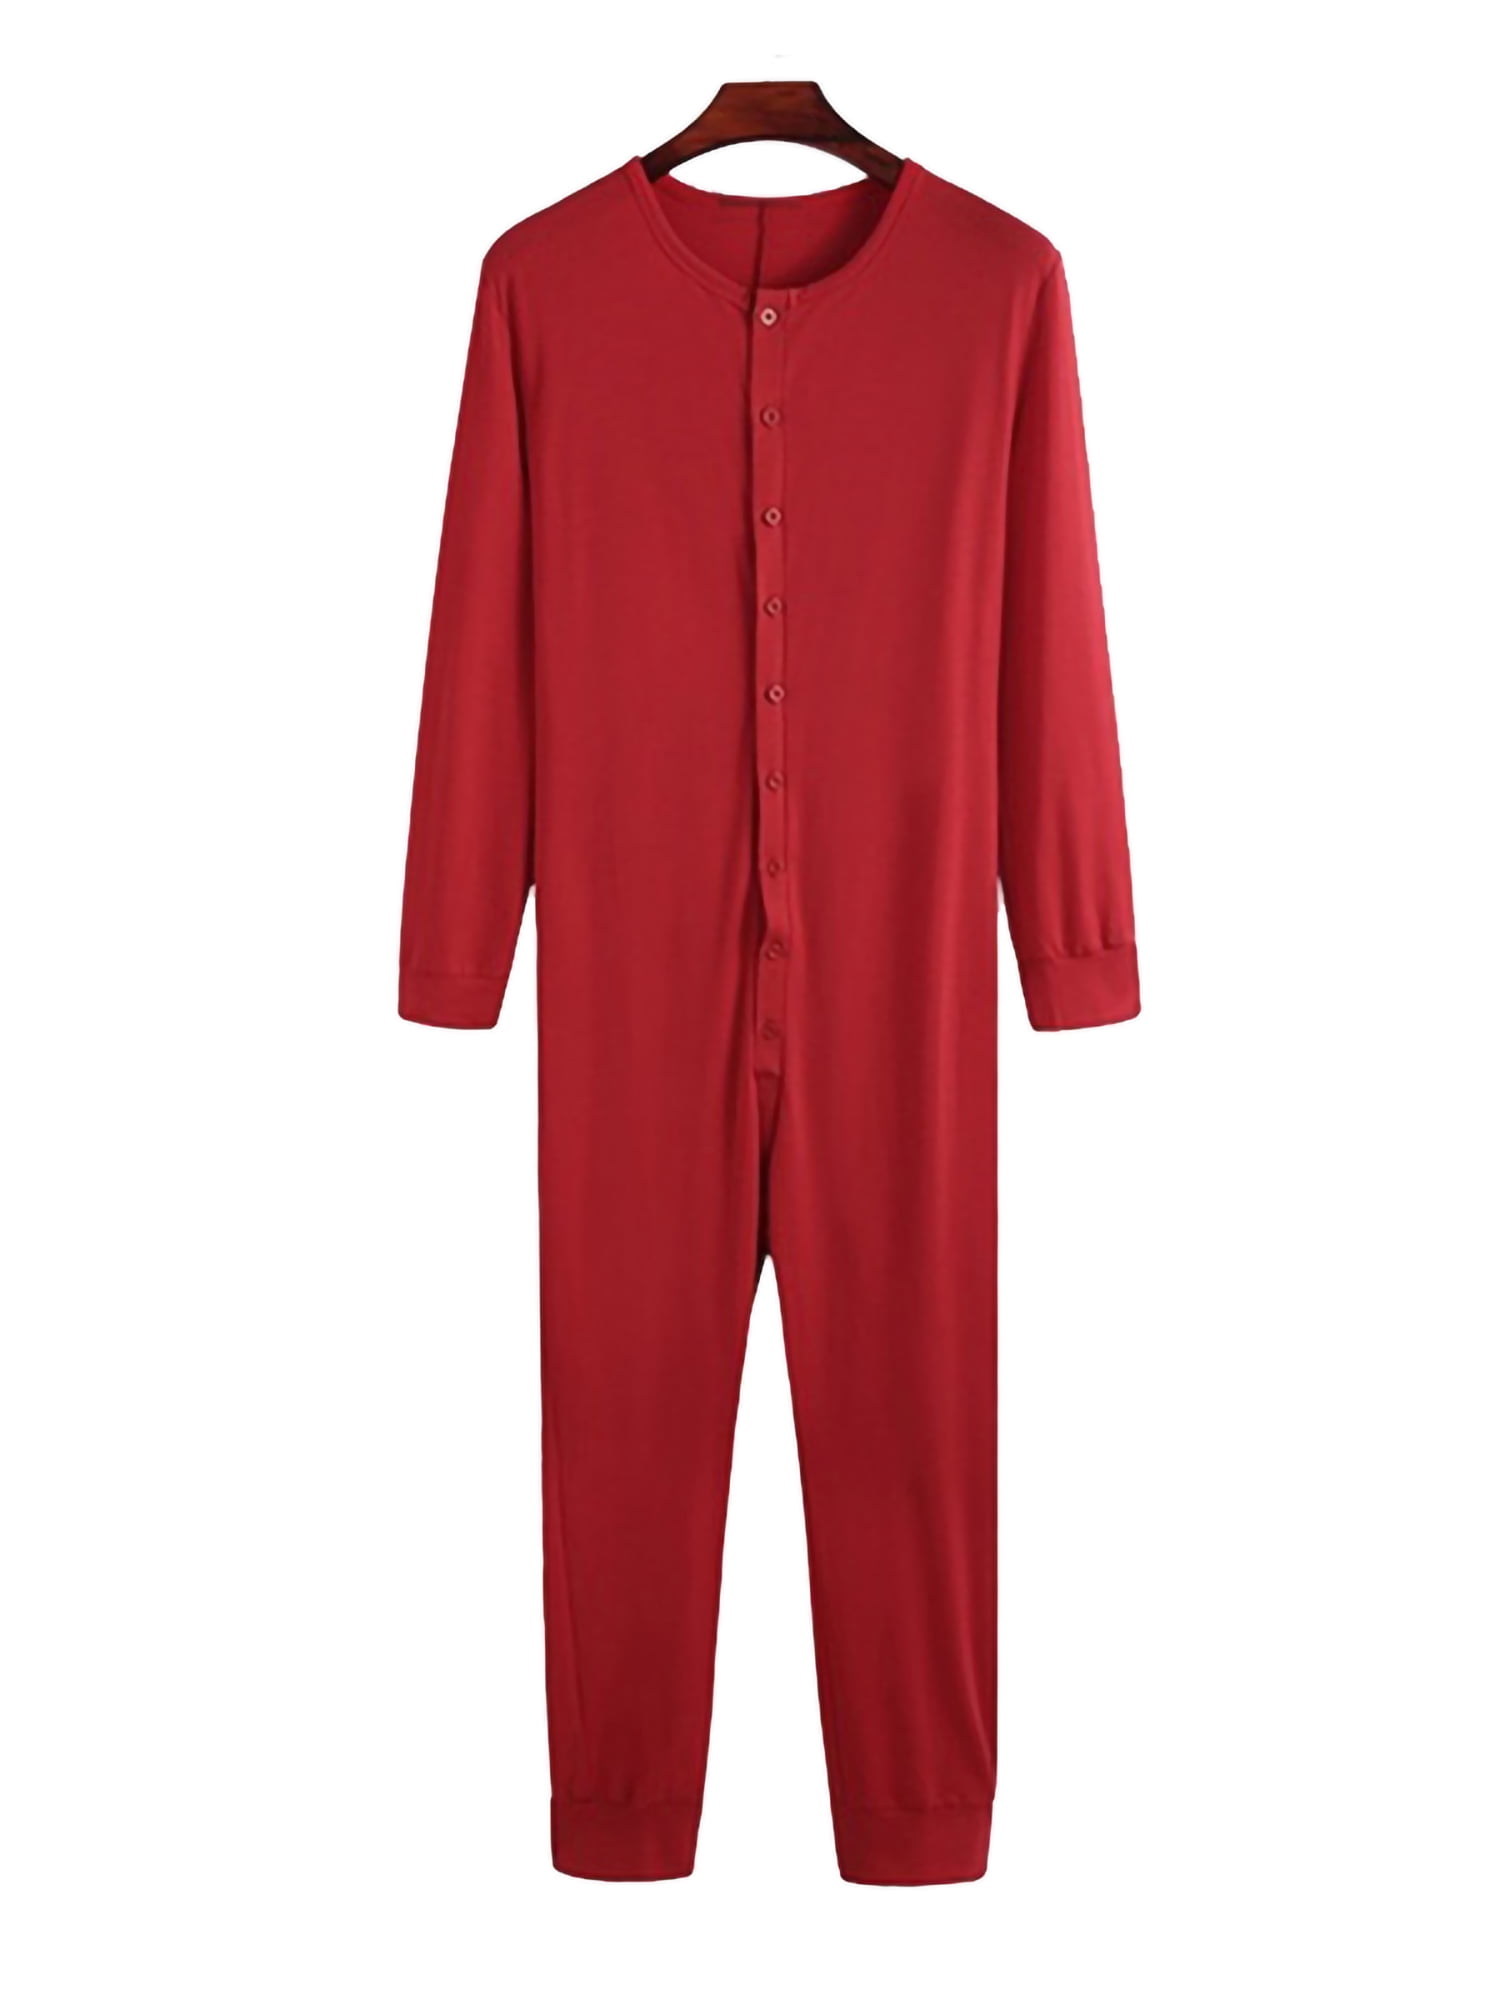 Grianlook Mens Bodysuit Underwear Union Suit Solid Color One Piece Pajama  Men Slim Fit Sleepwear Plain Long Sleeve Onesie Pajamas Red XL 